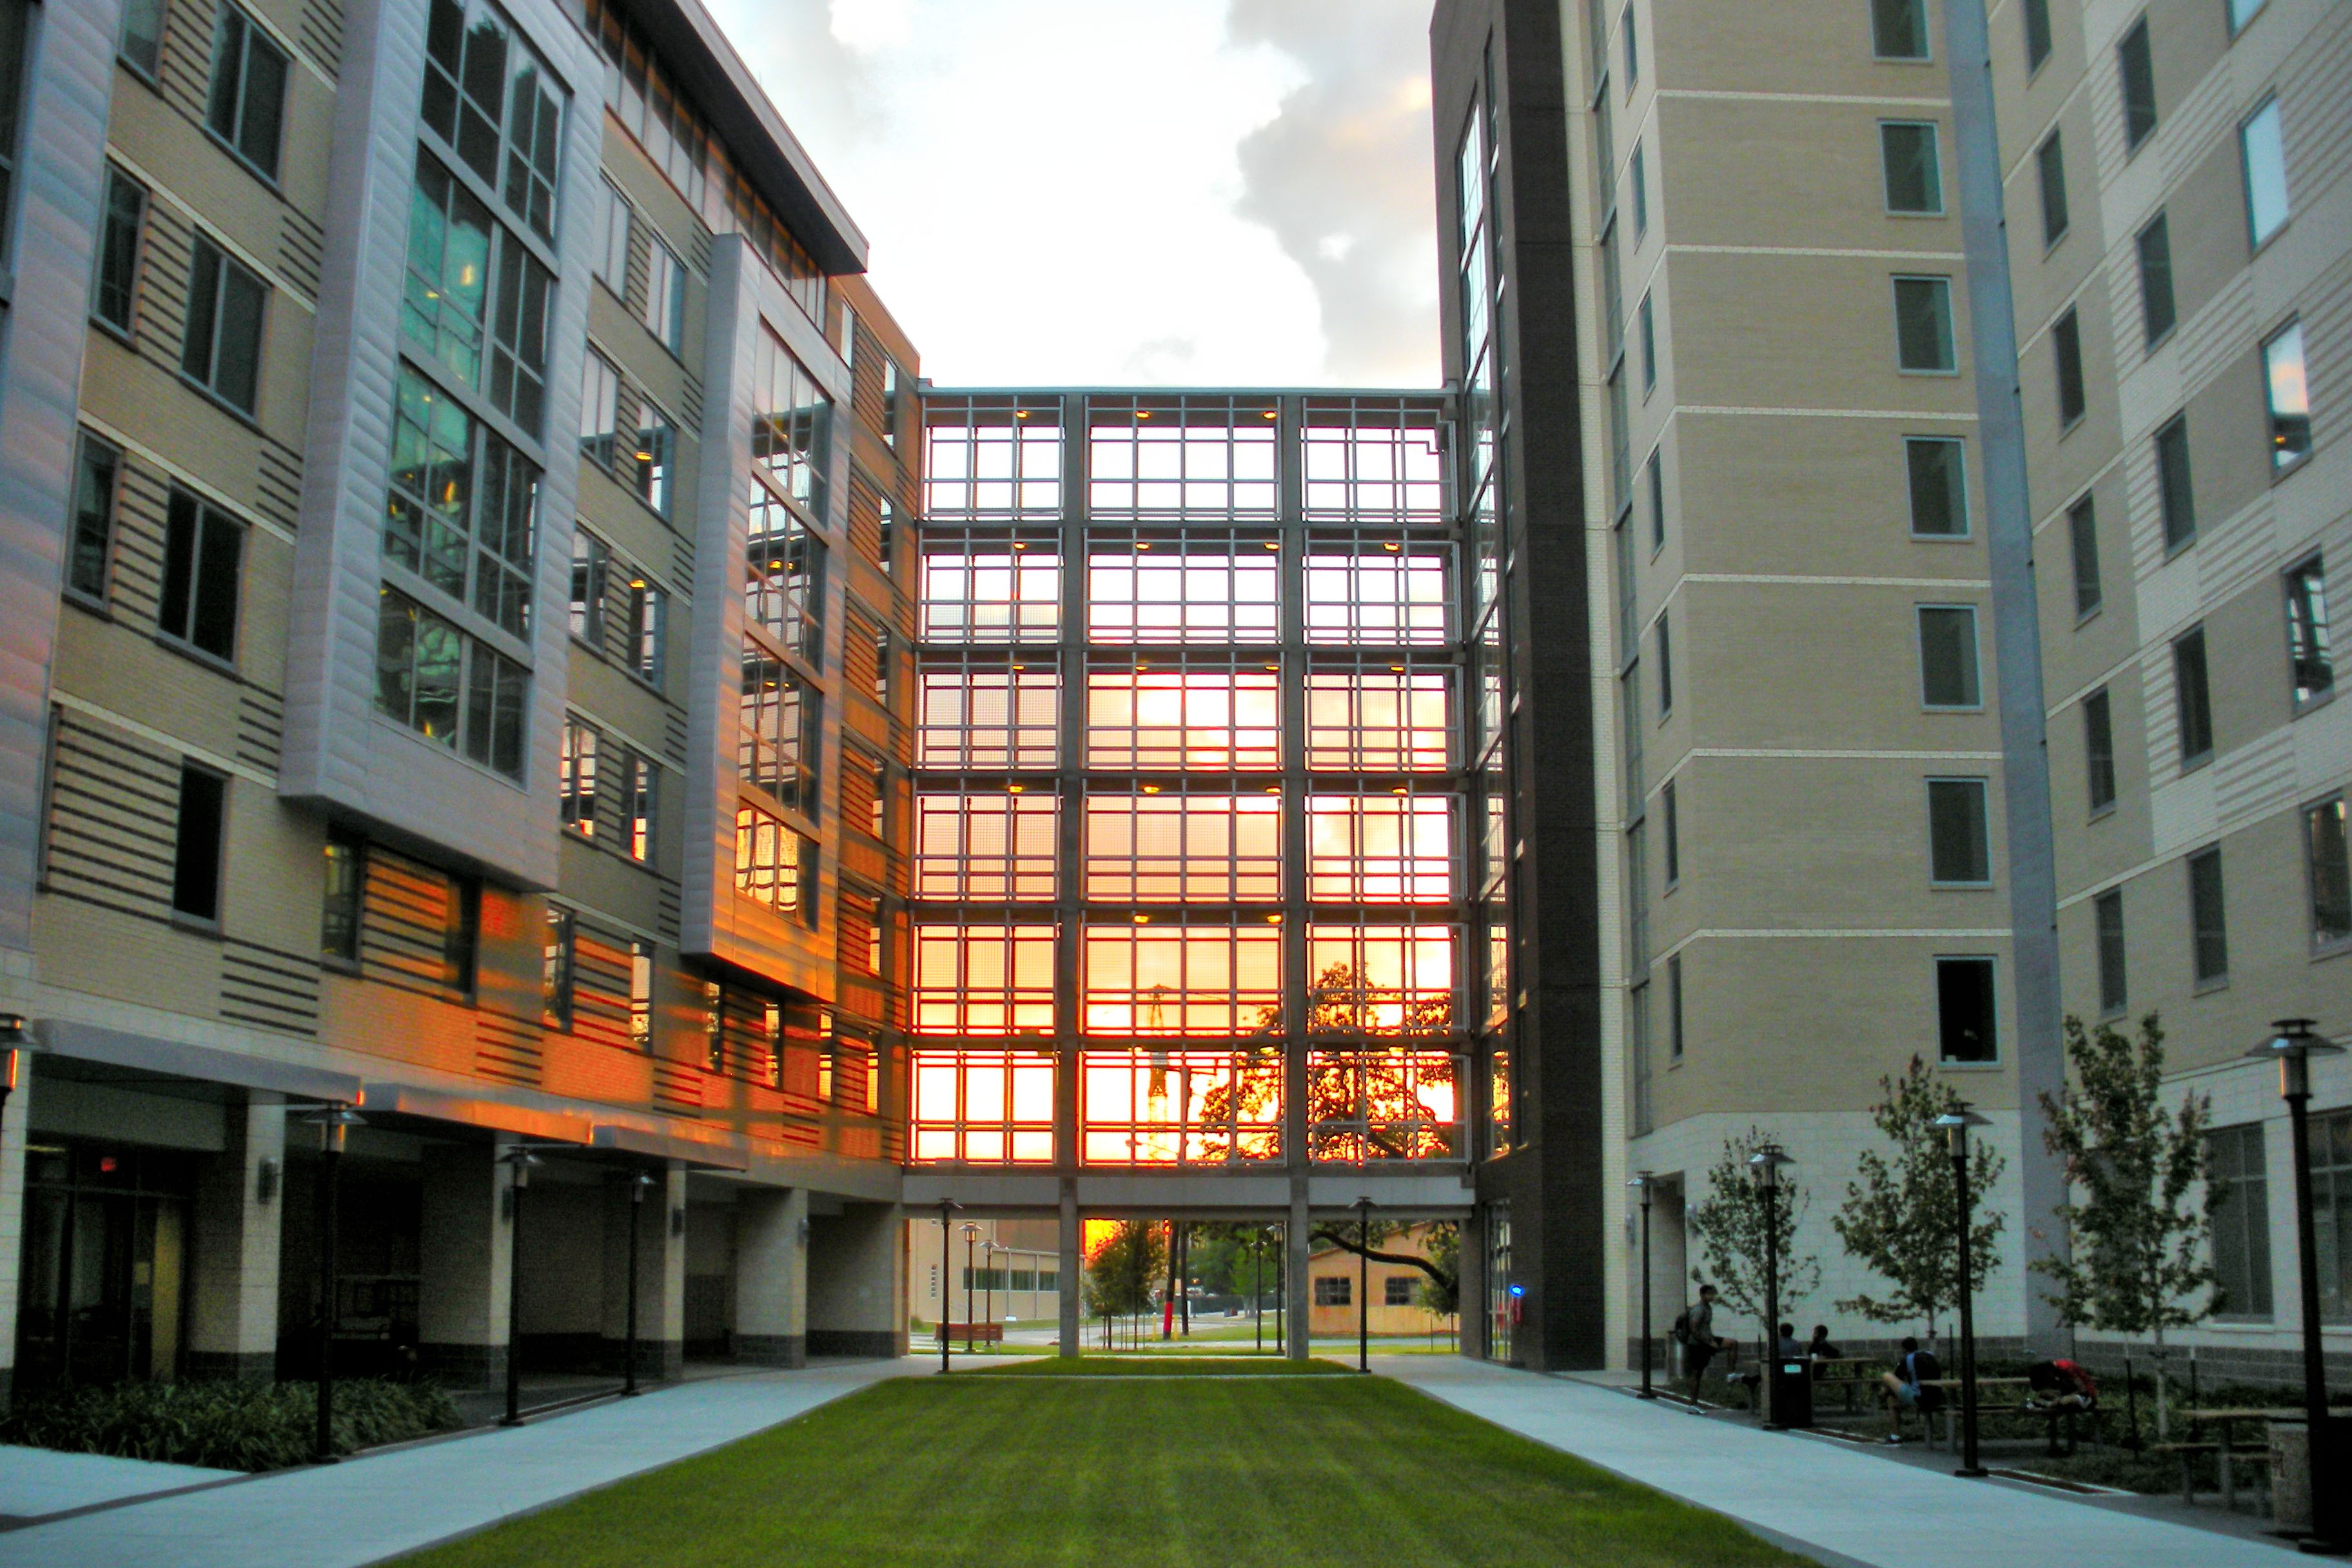 university of houston downtown dorms